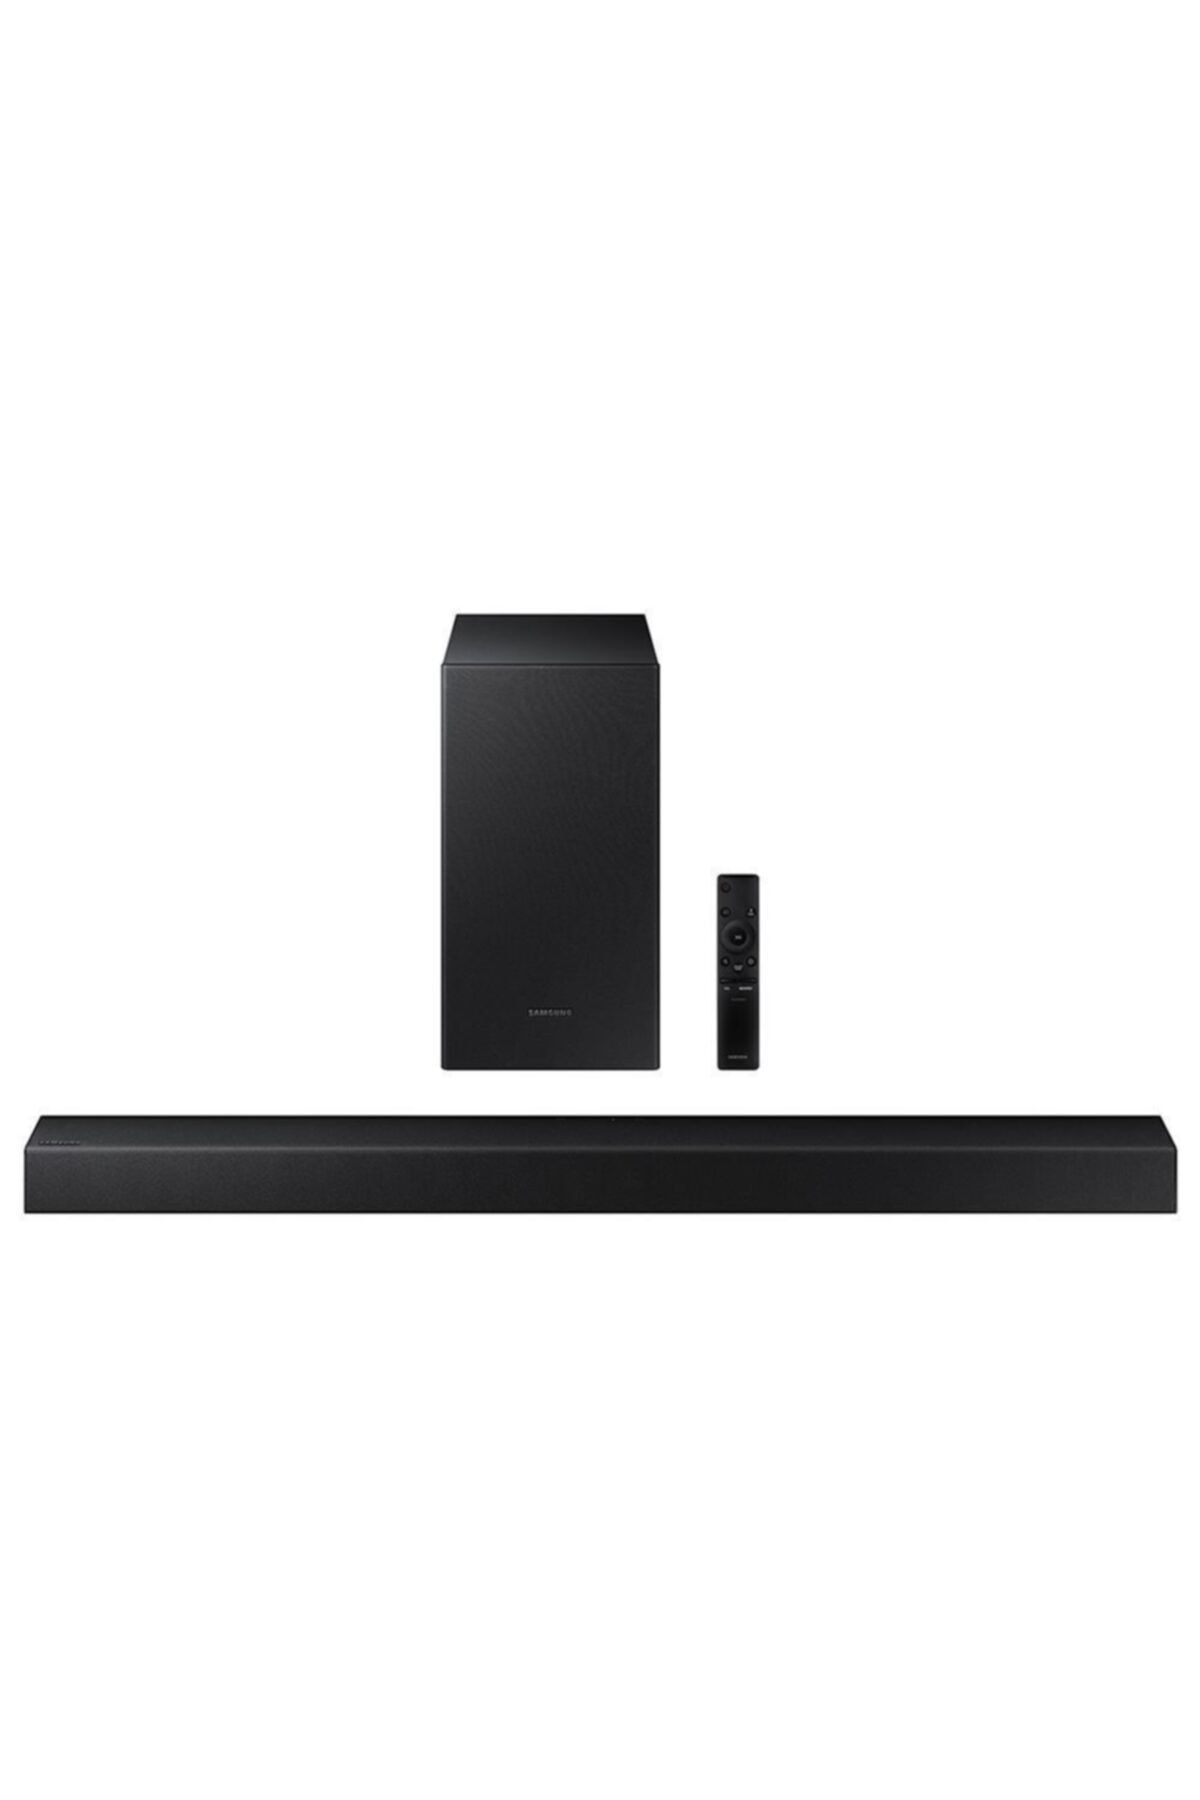 Samsung Siyah Hw-r450/tk Soundbar